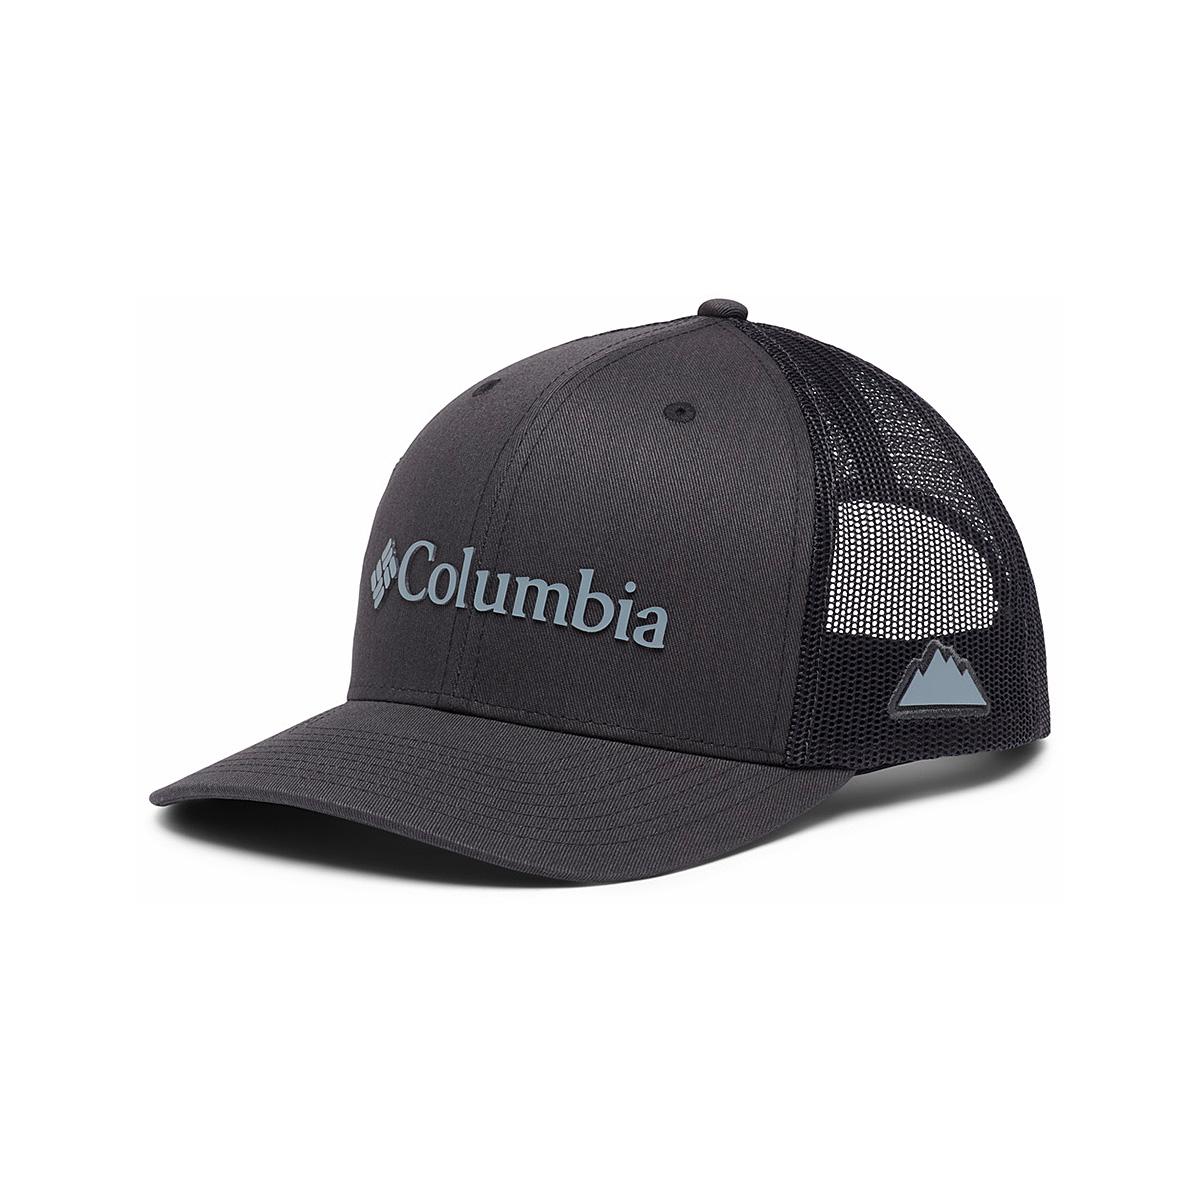  Men's Columbia Mesh Snapback Hat